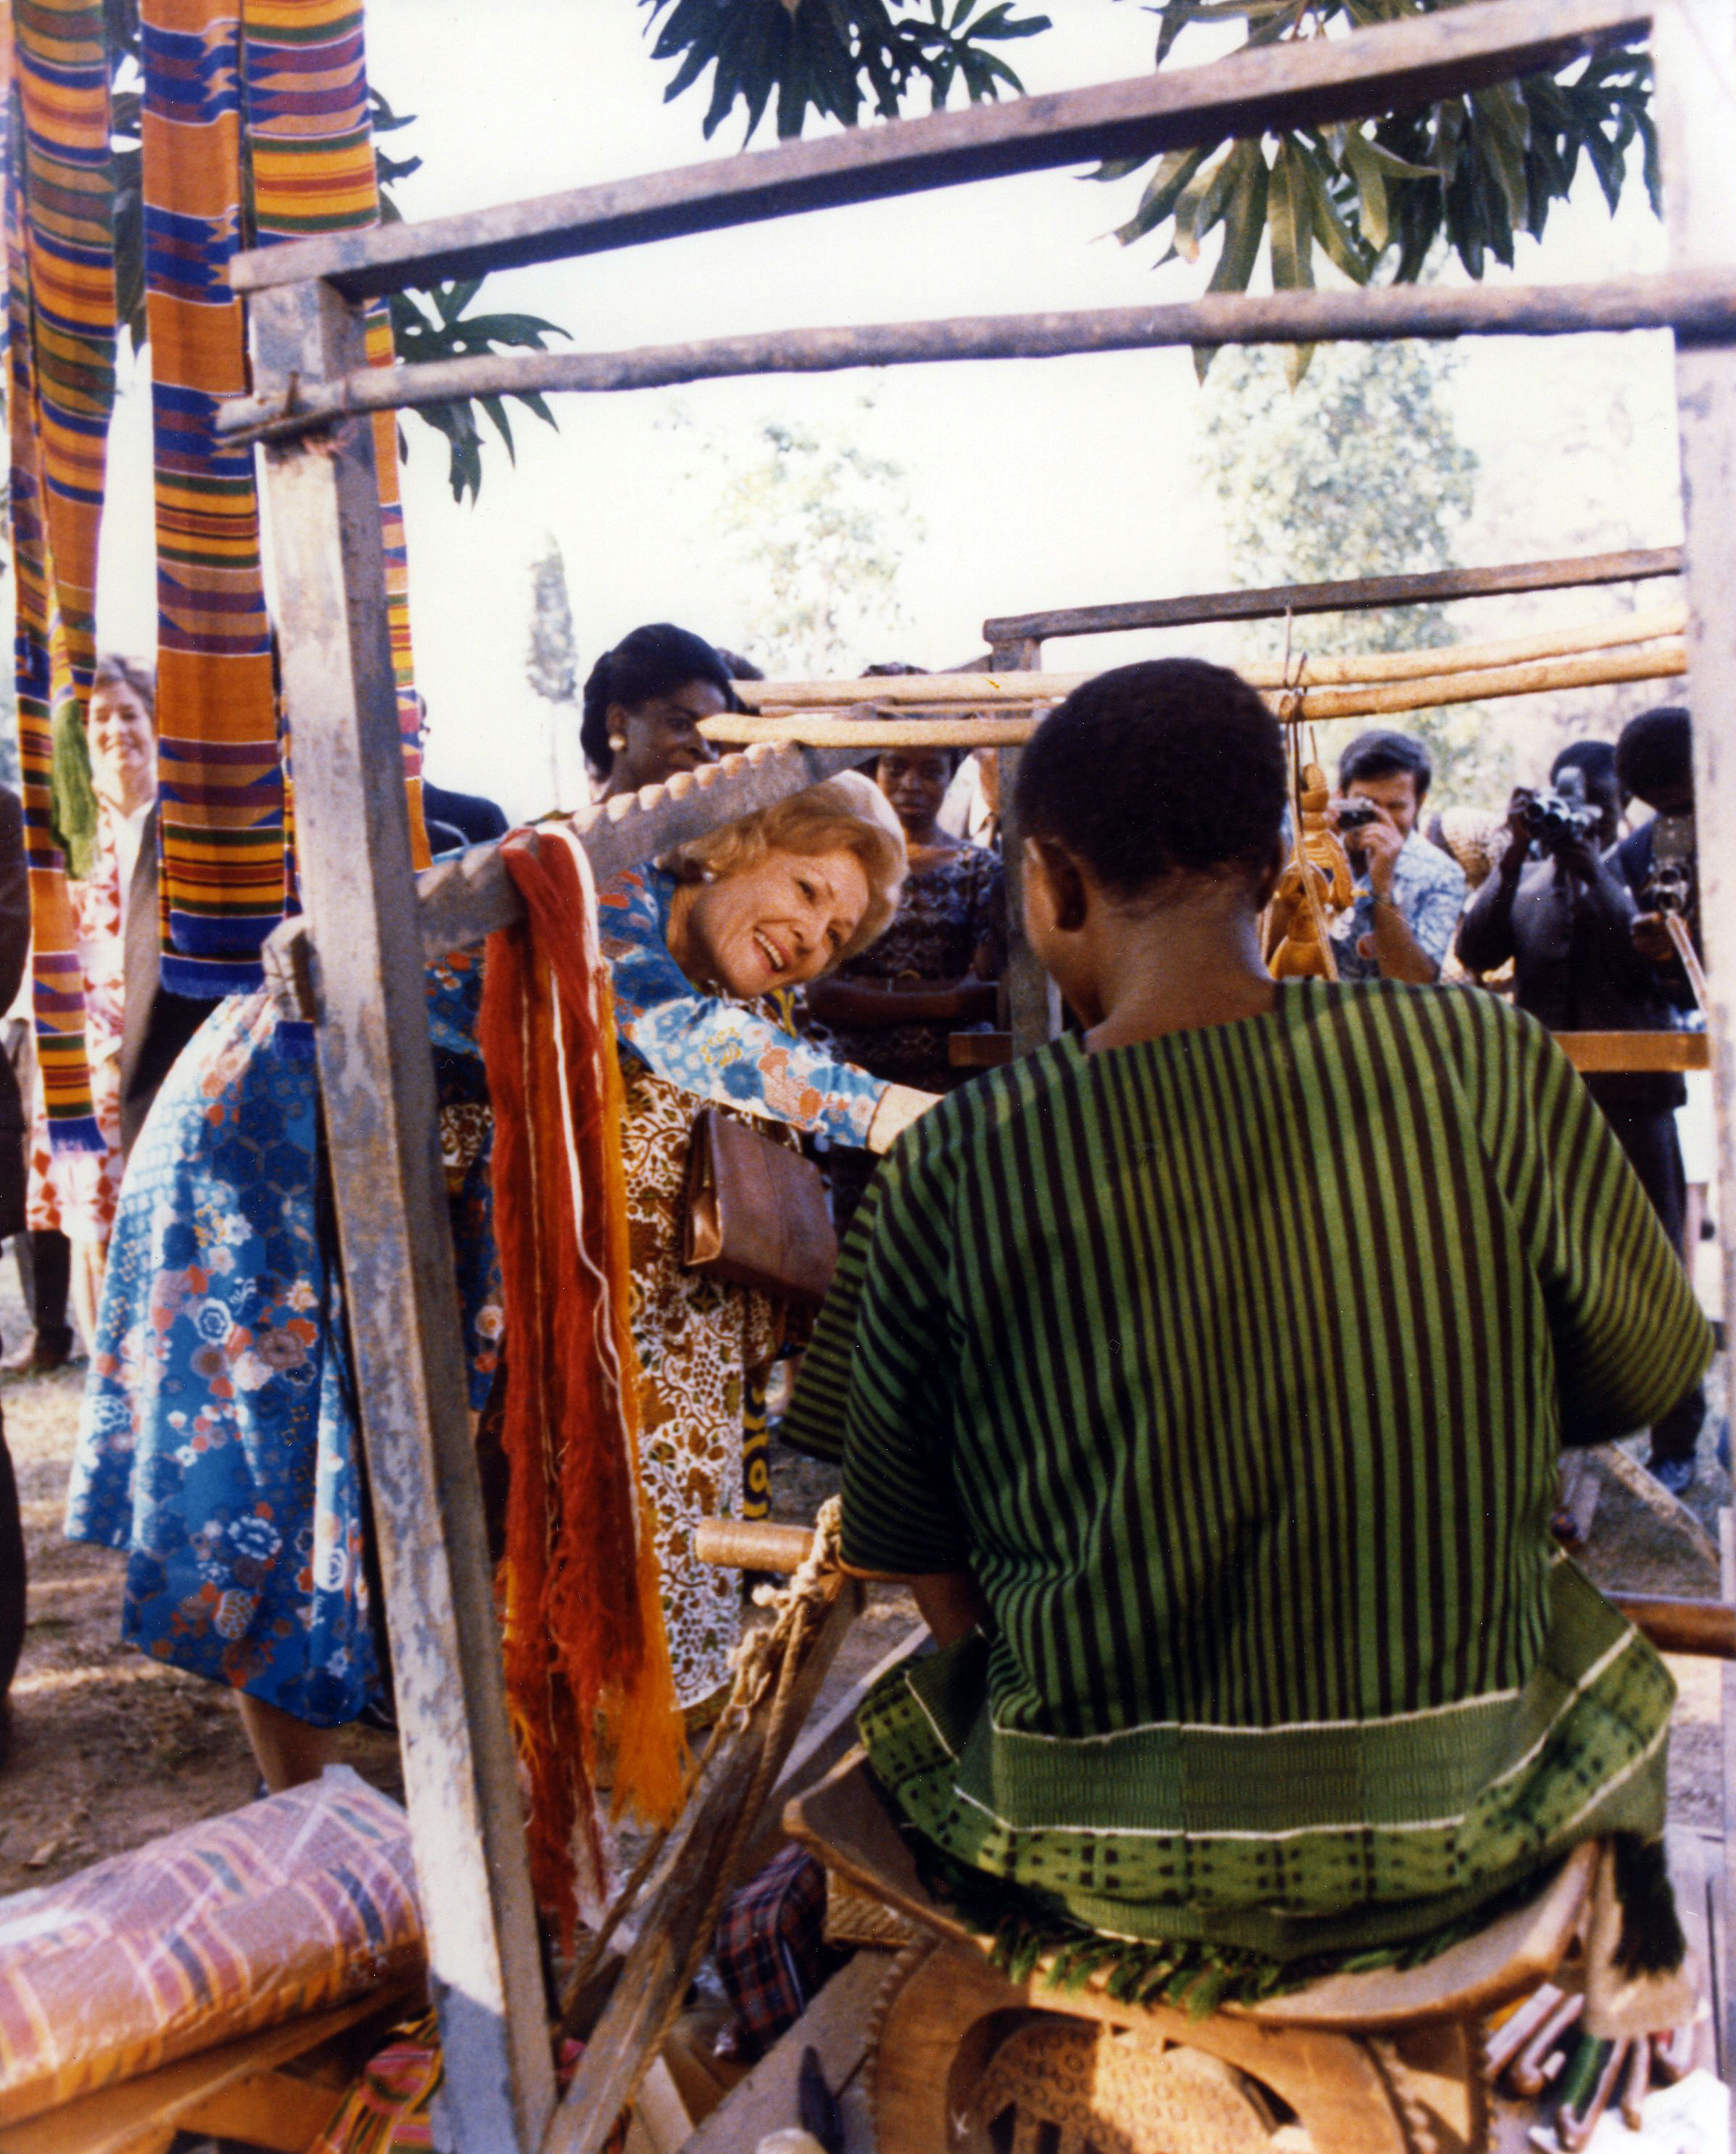 70. Mrs. Nixon speaking with craftsmen in Africa.